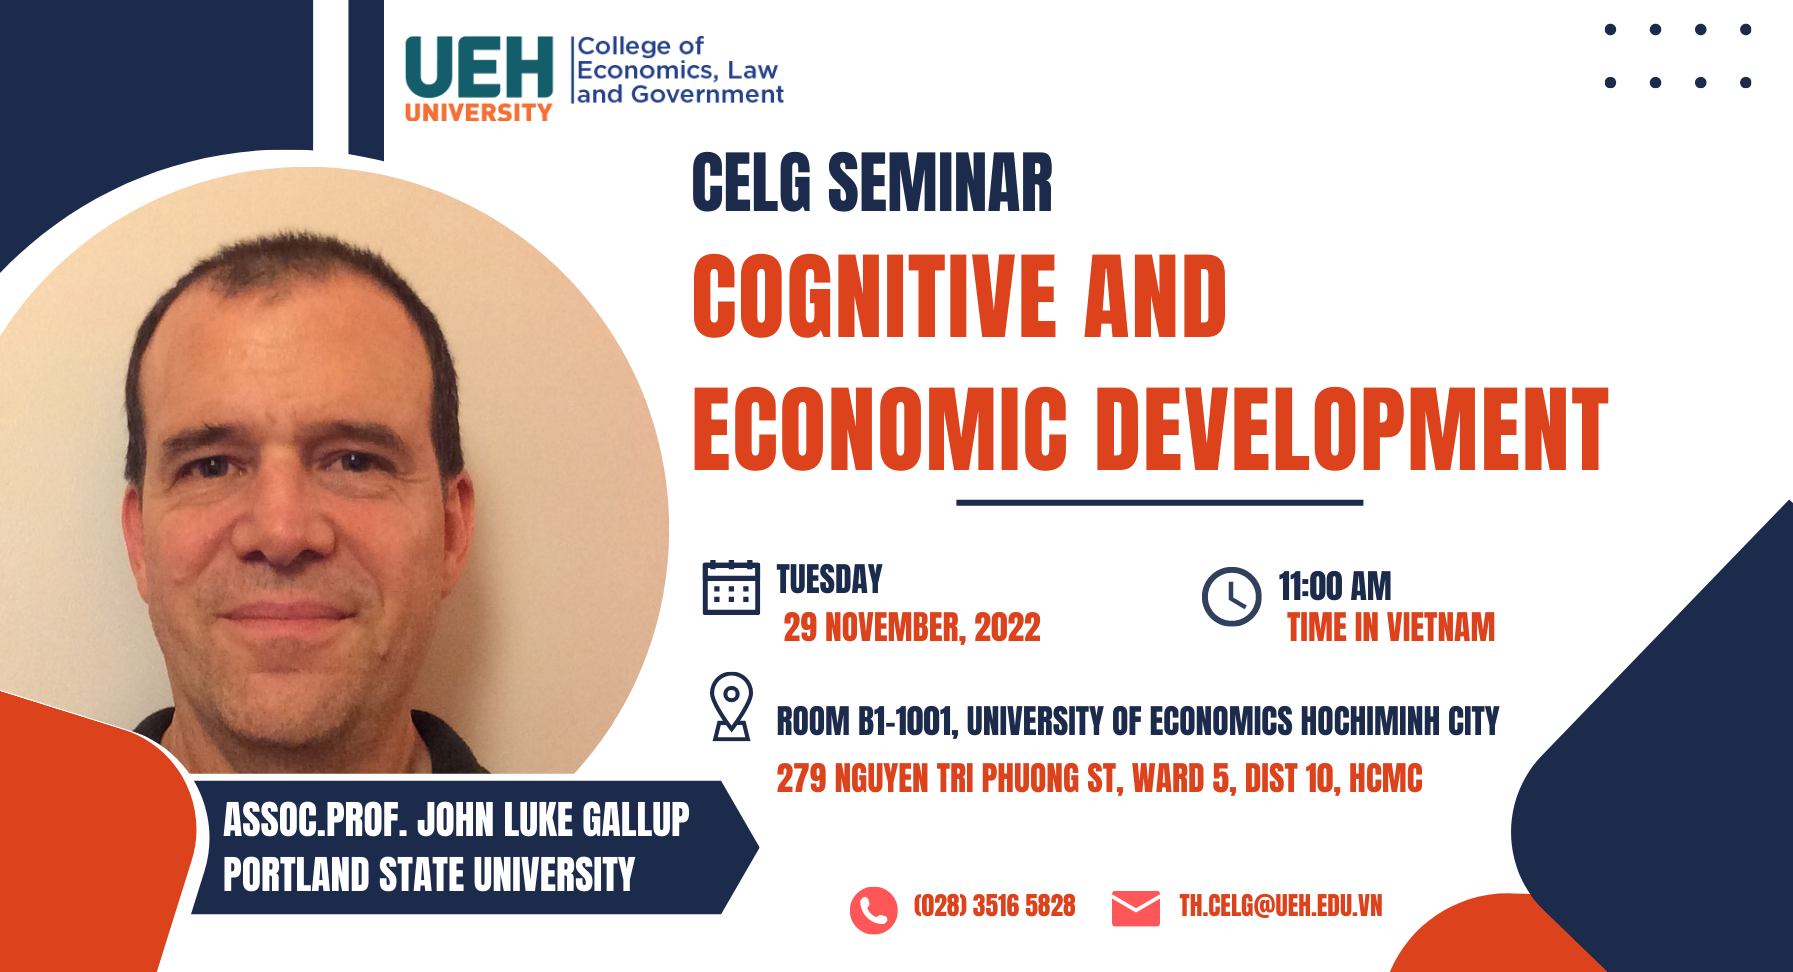 CELG SEMINAR: Cognitive and Economic Development